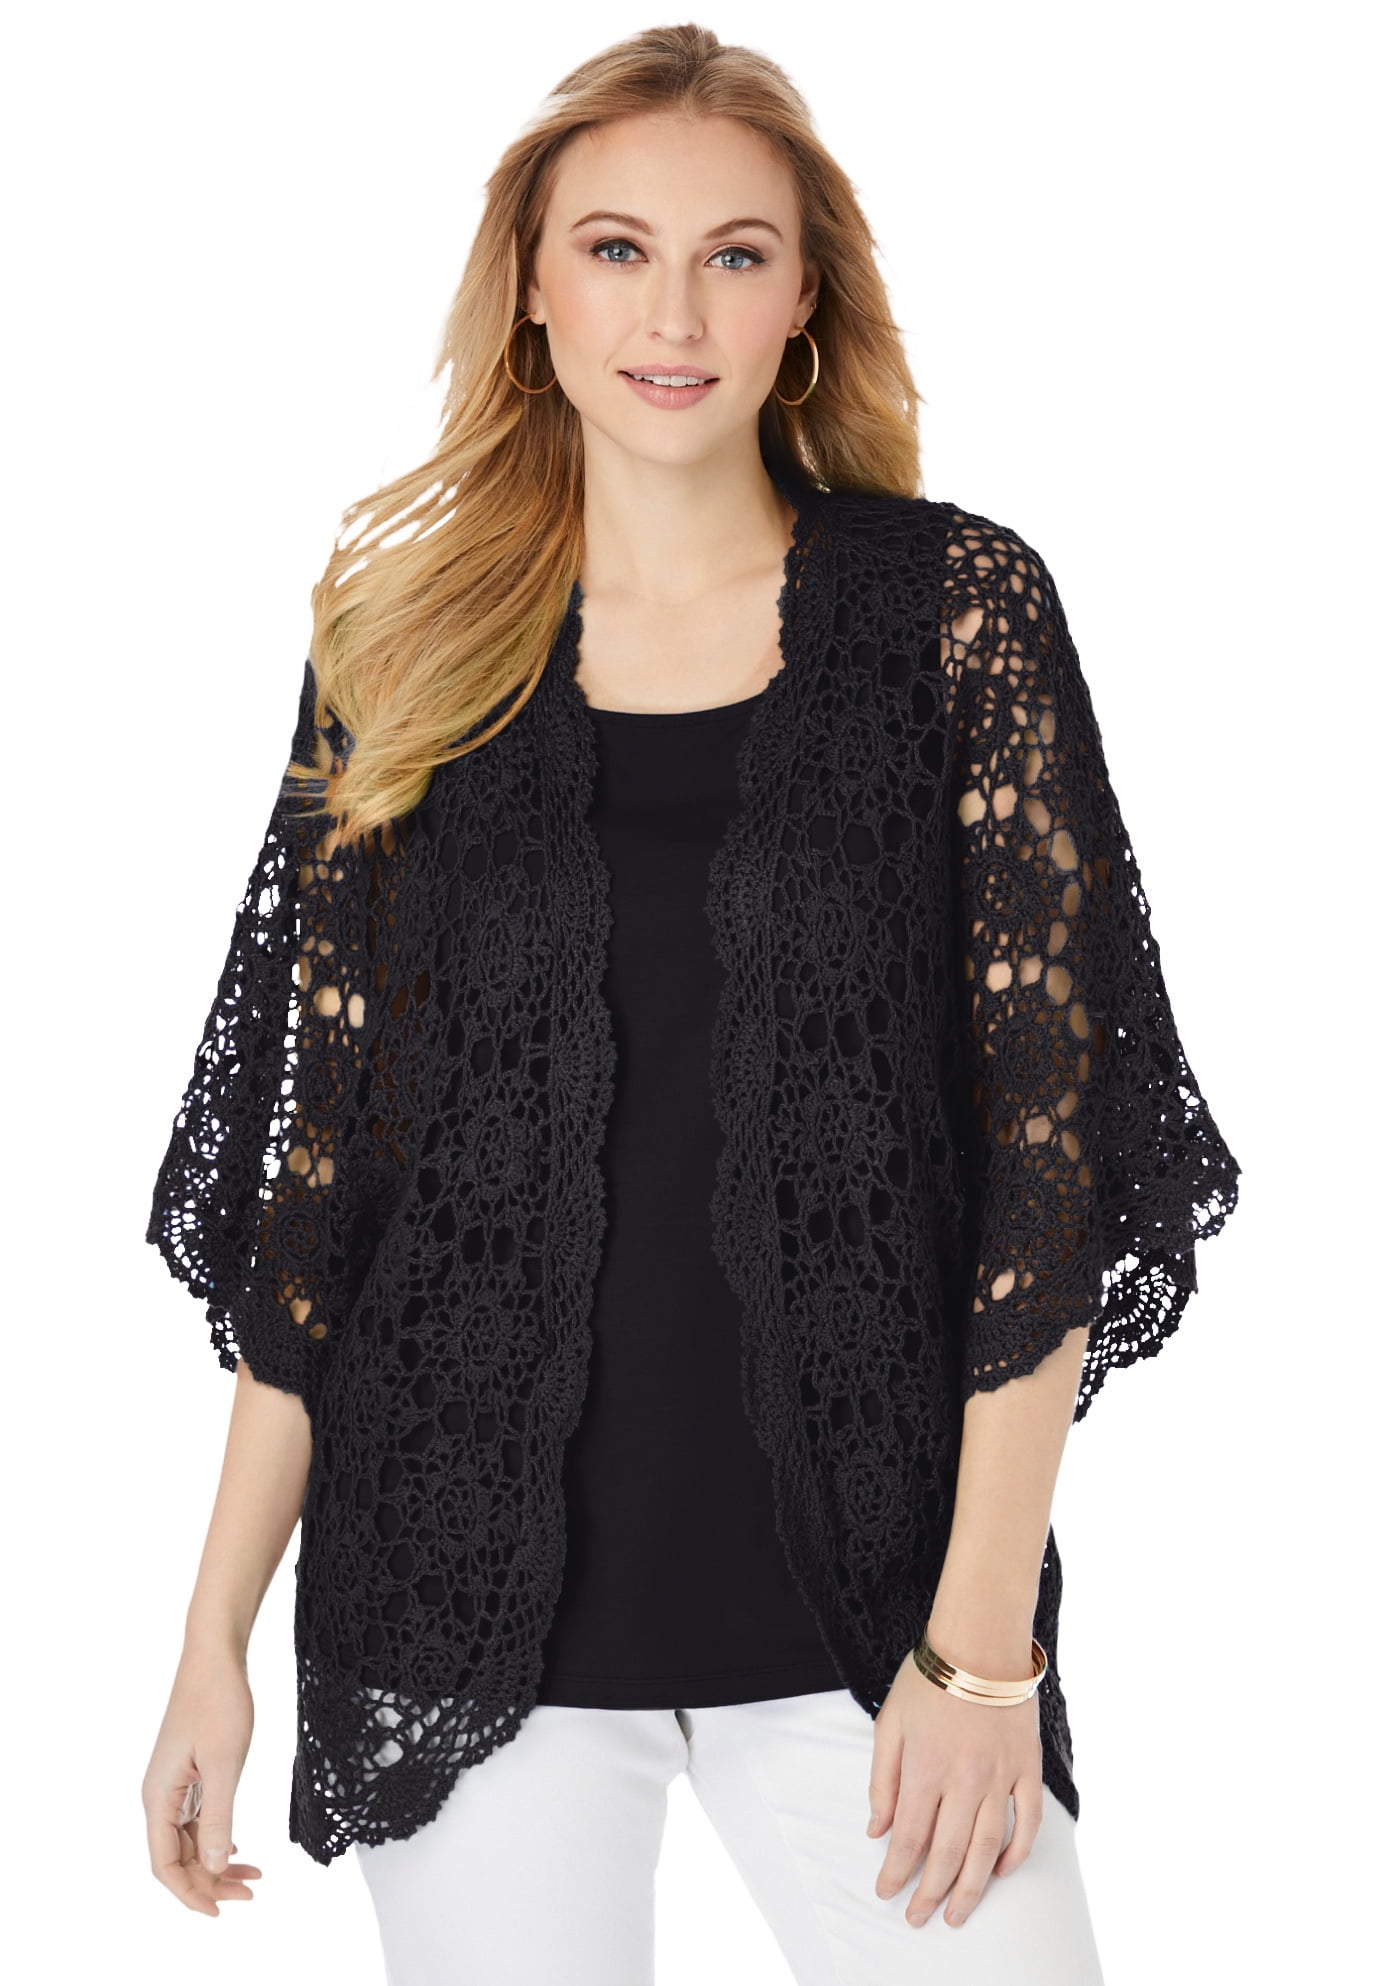 Jessica London Women's Plus Size Crochet Cardigan Sweater - Walmart.com